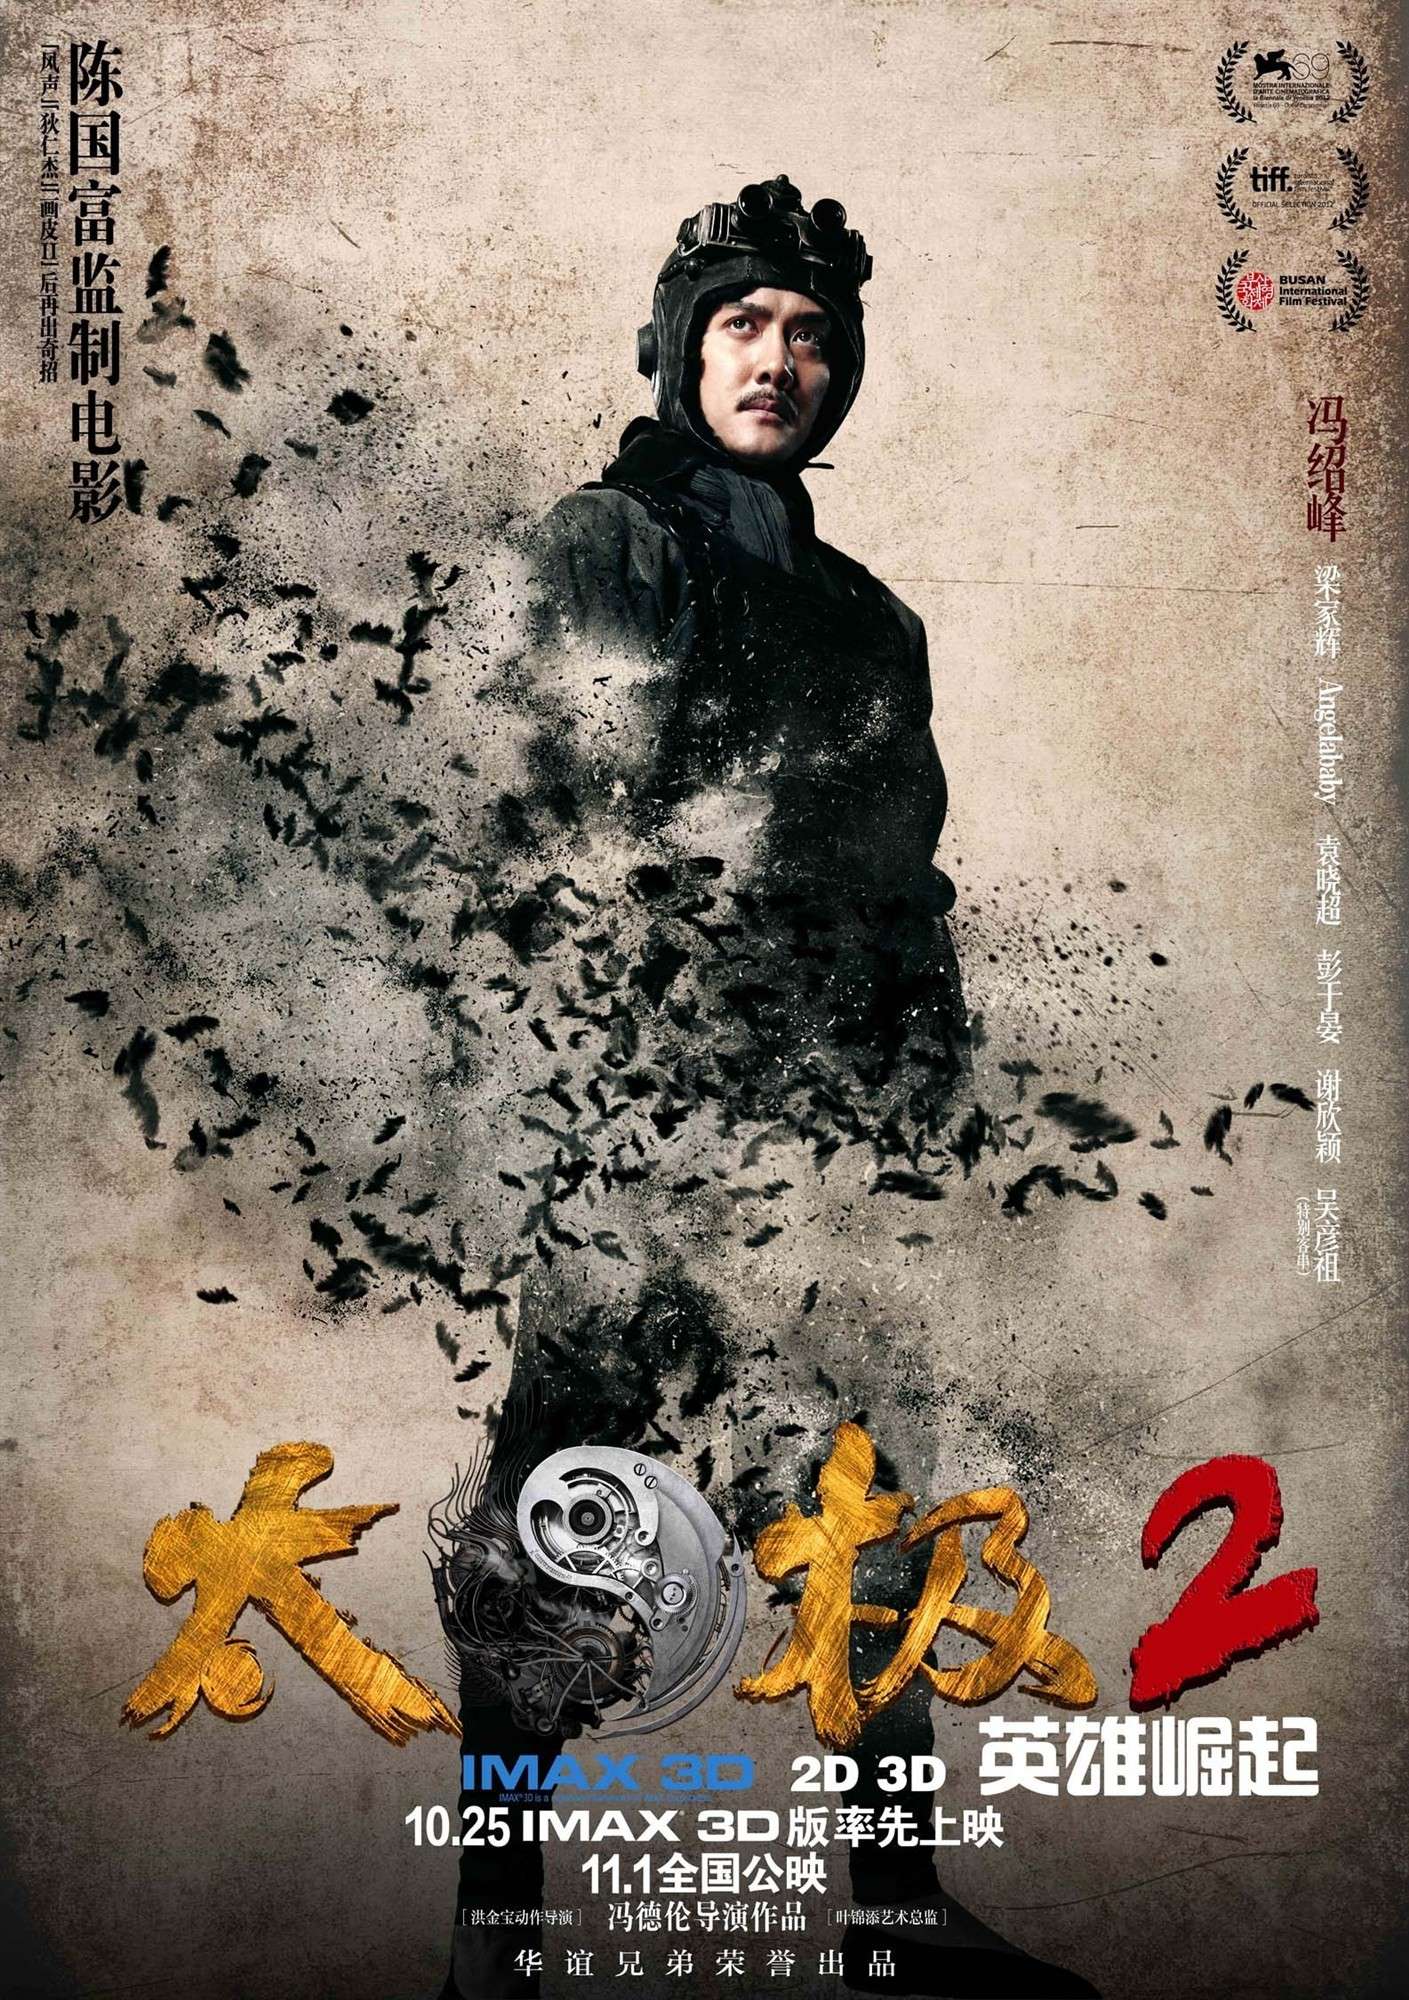 Poster of Well Go USA's Tai Chi Hero (2013)